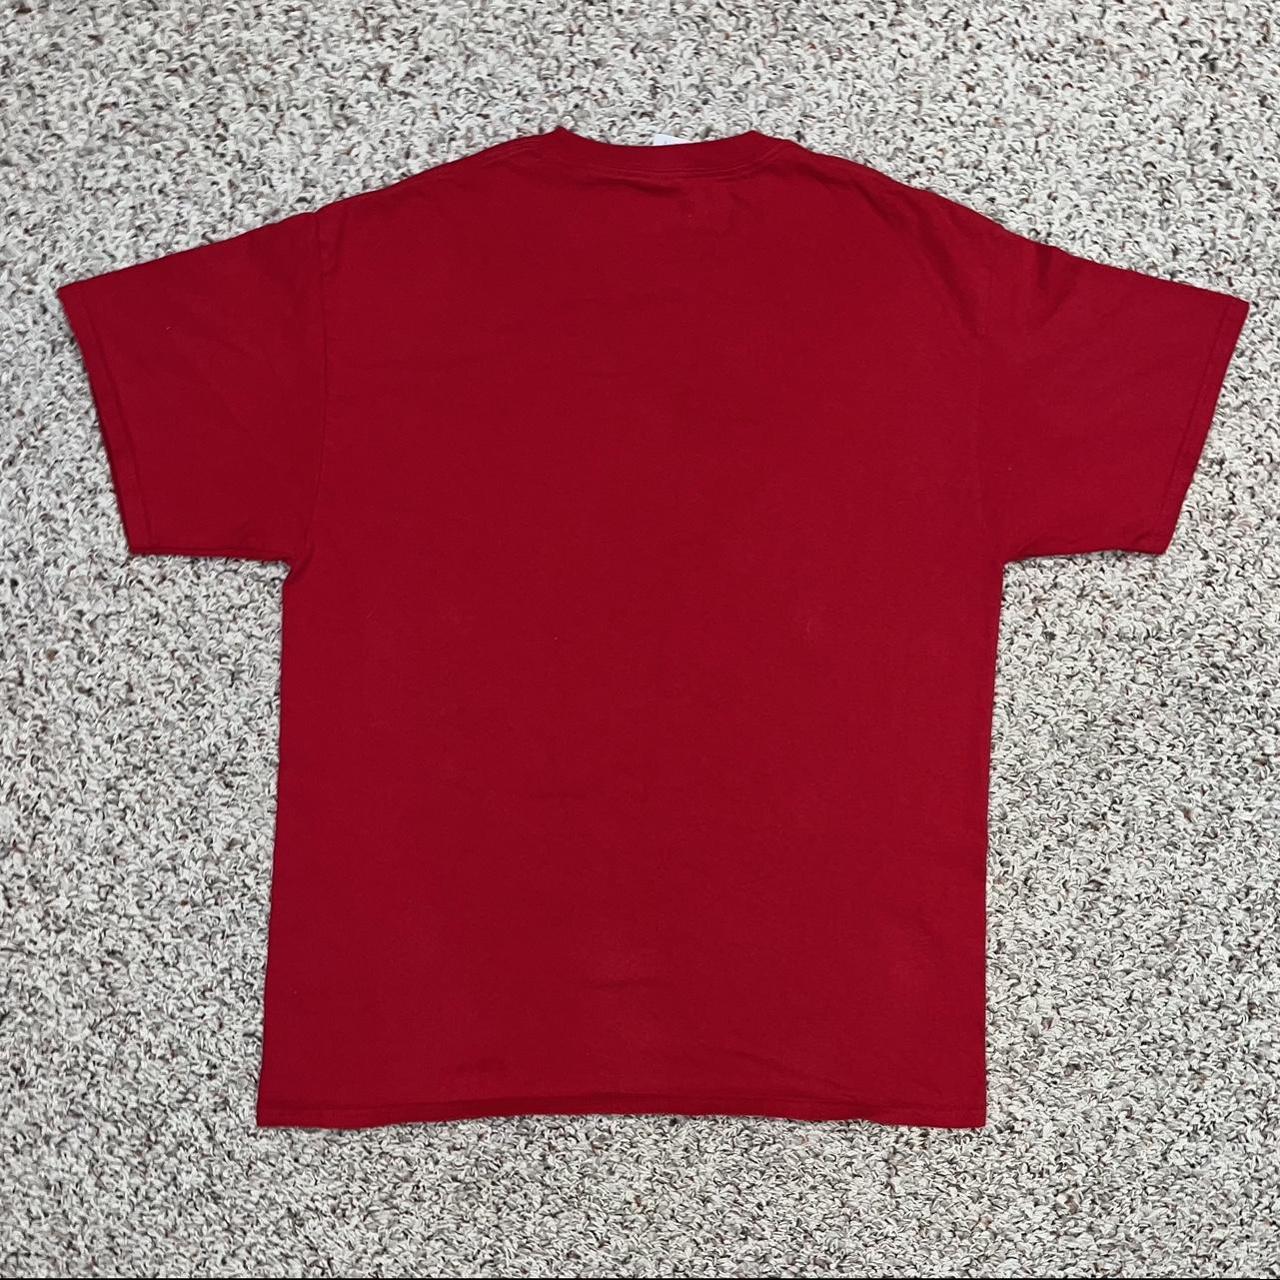 Men's Red T-shirt (2)